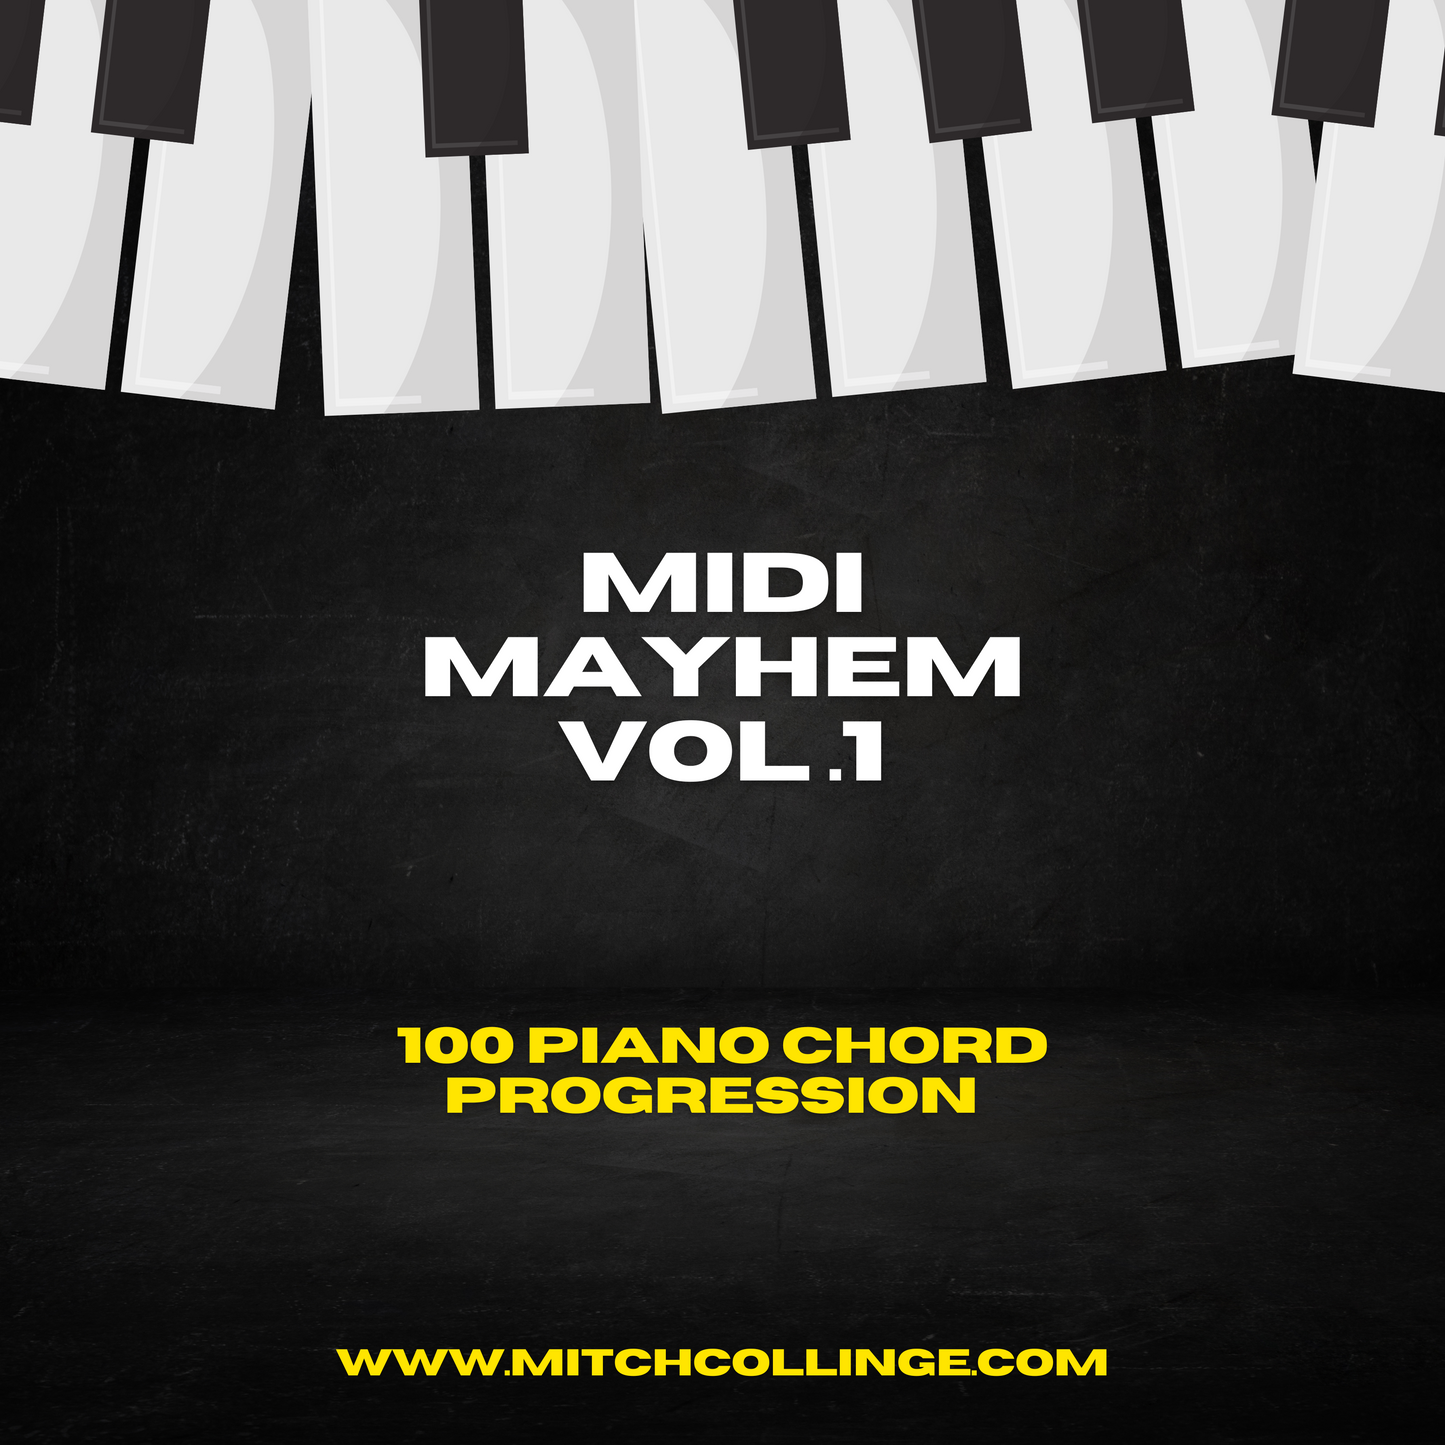 MIDI MAYHEM VOL.1